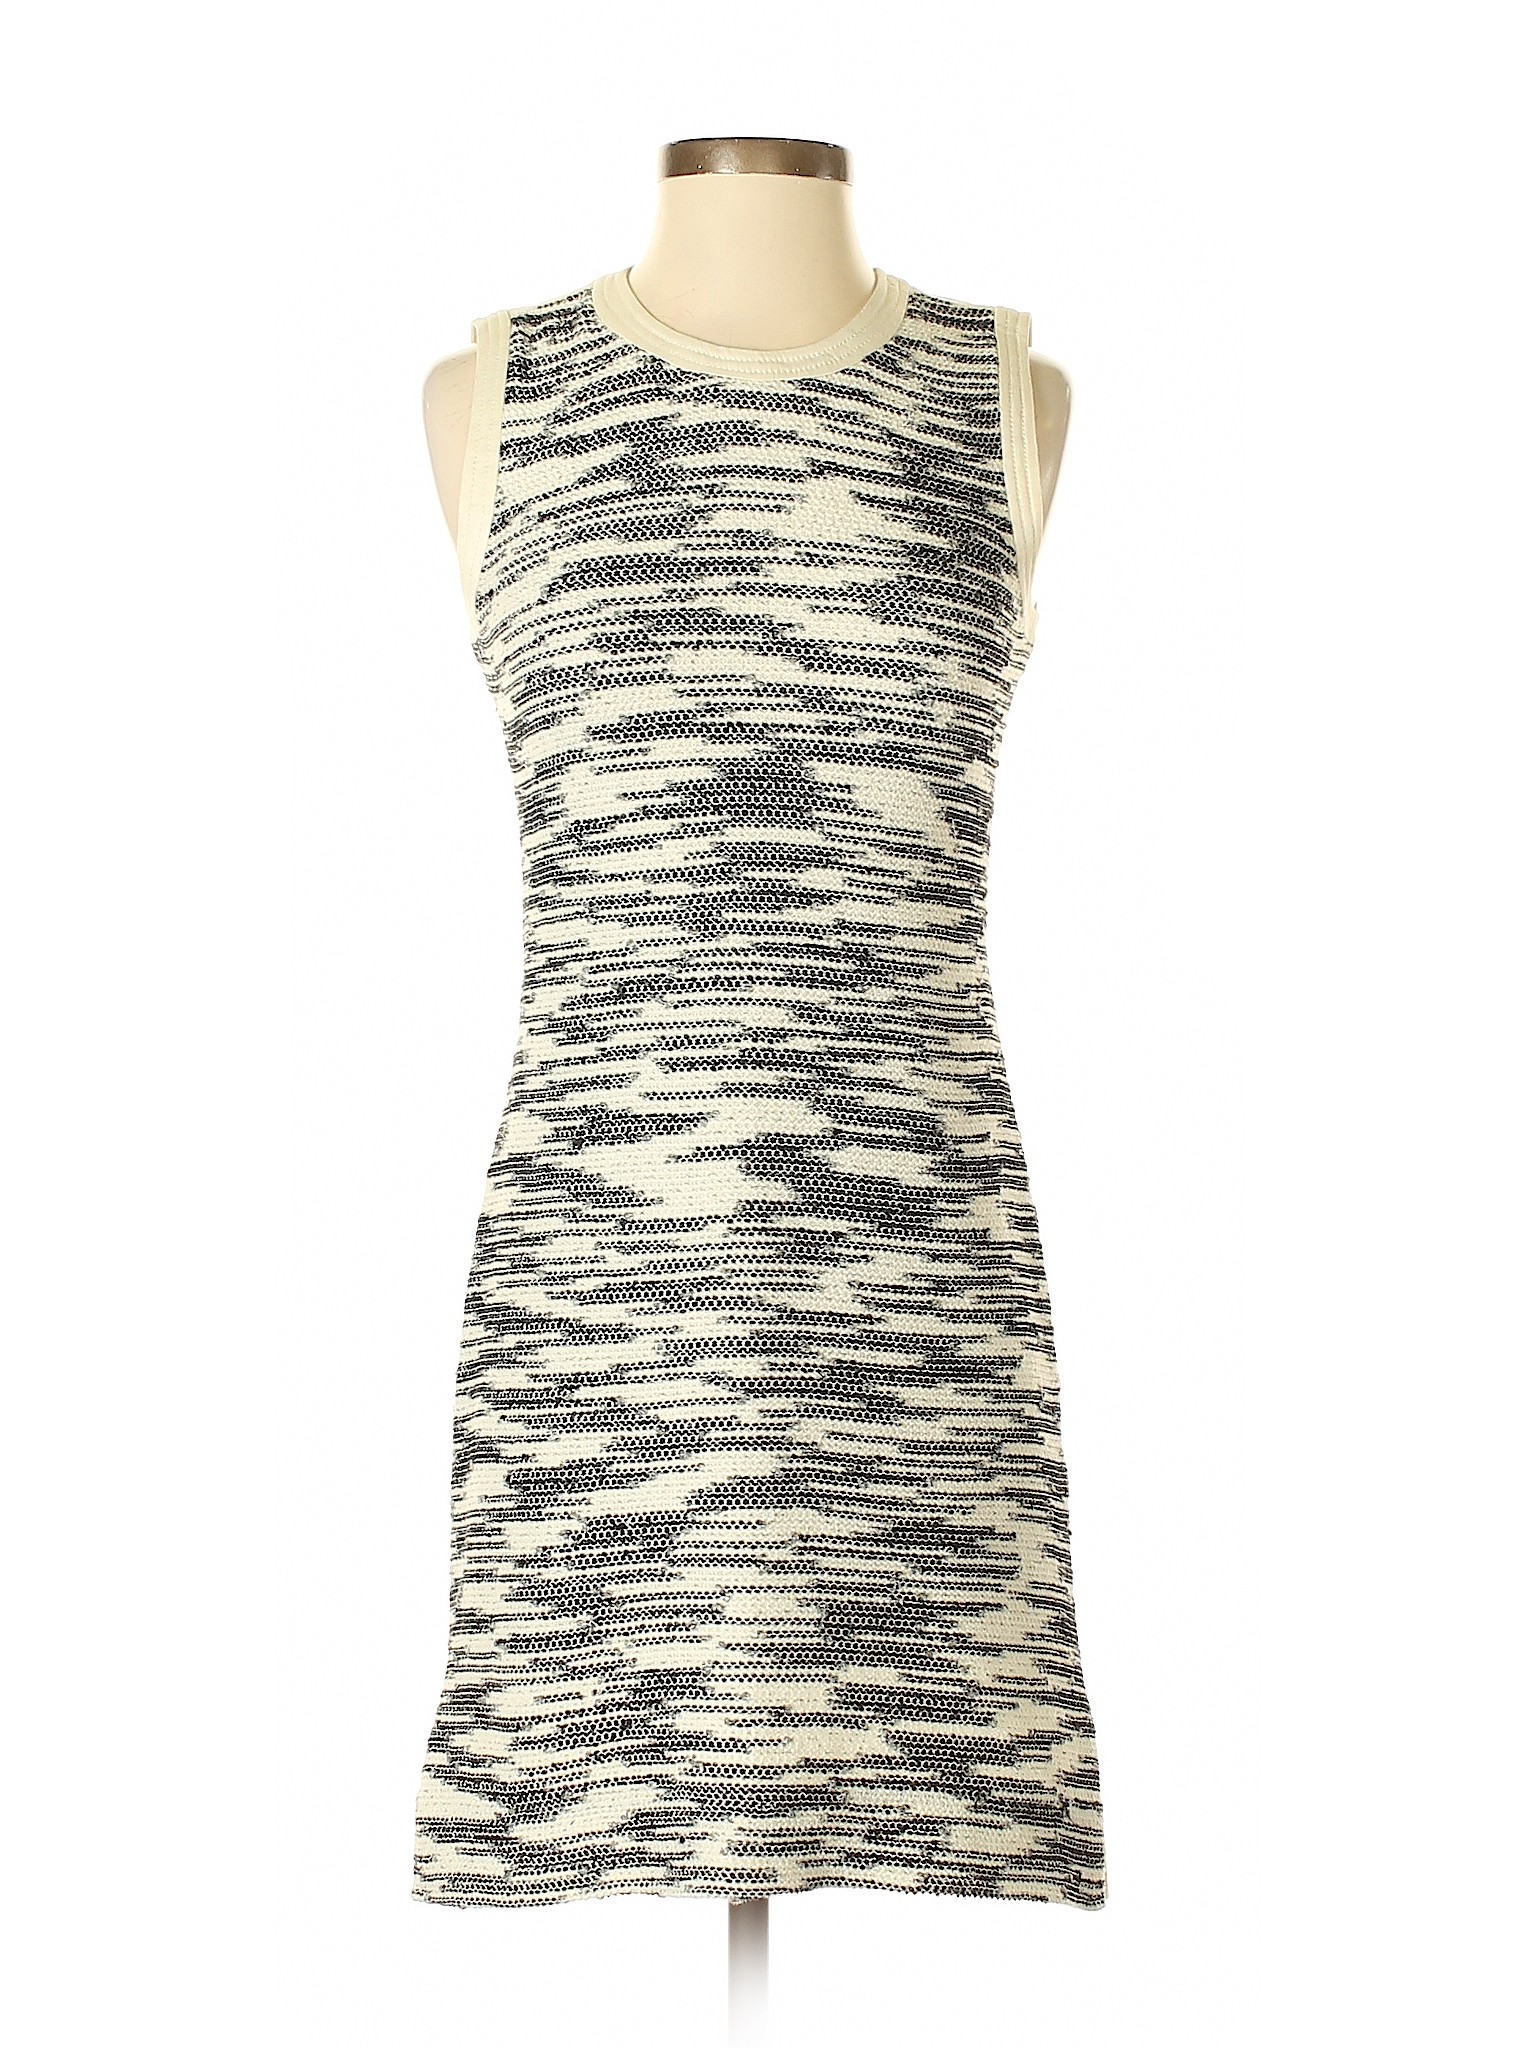 Derek Lam Print Ivory Casual Dress Size 0 - 94% off | thredUP